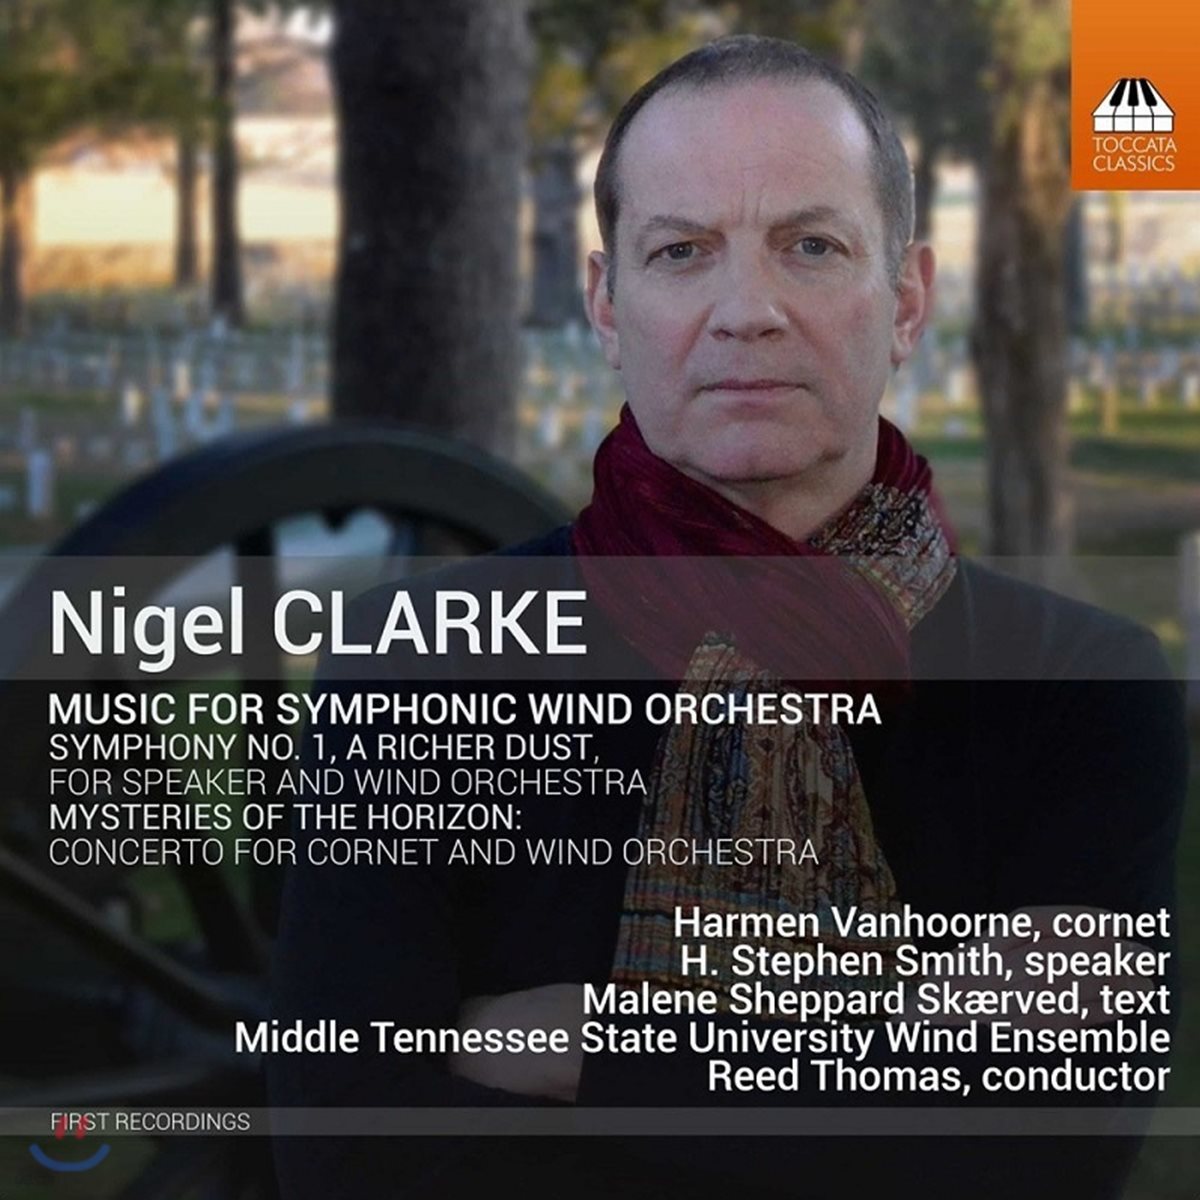 Reed Thomas 나이젤 클락: 심포닉 윈드 오케스트라를 위한 음악 - 하르멘 반후네, 미들 테네시 주립 대학교 윈드 앙상블, 리드 토마스 (Nigel Clarke: Music For Symphonic Wind Orchestra)